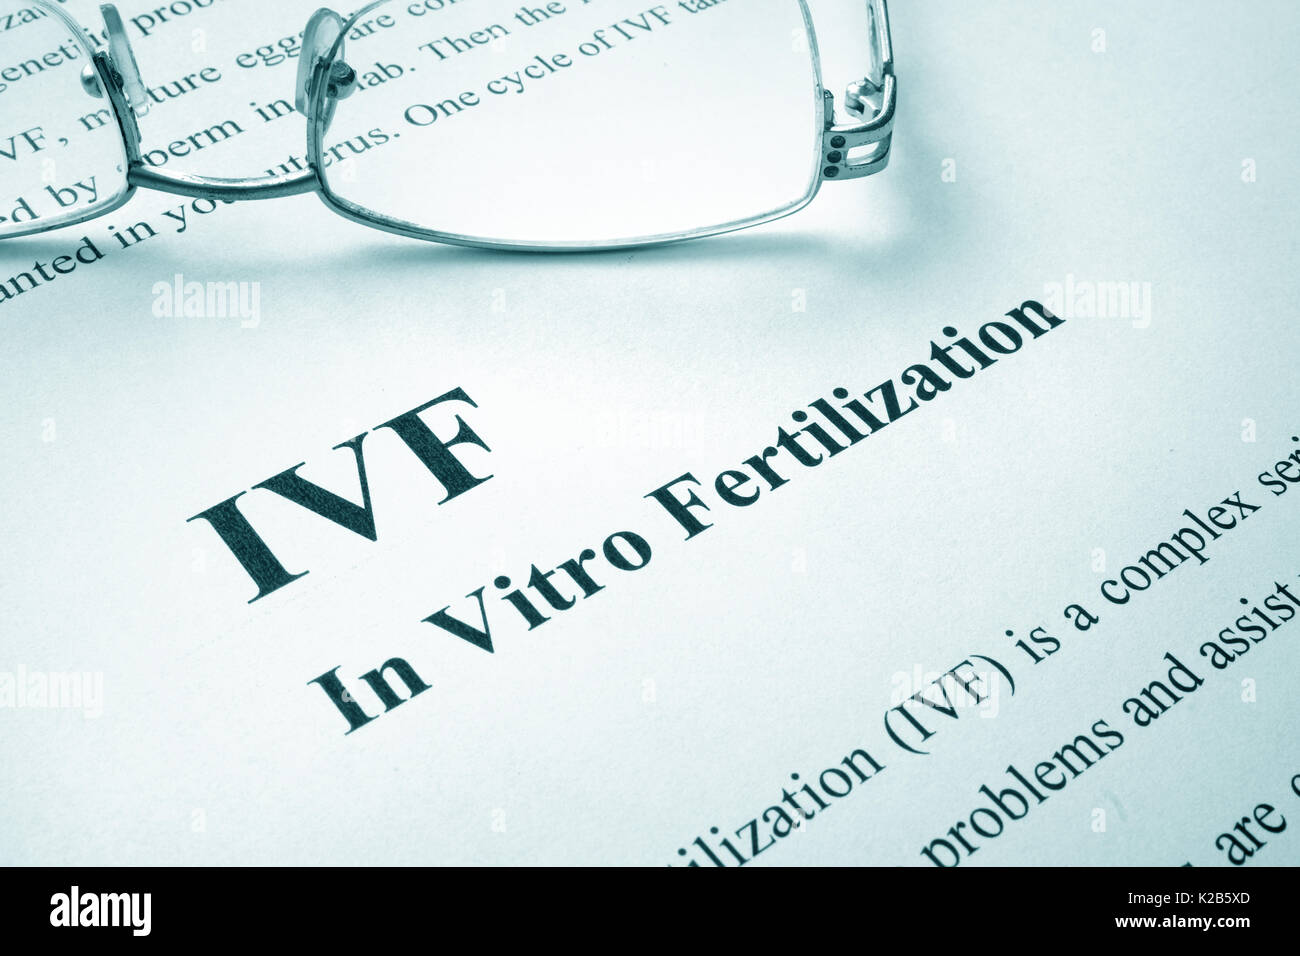 Document with title IVF (In Vitro Fertilization). Stock Photo